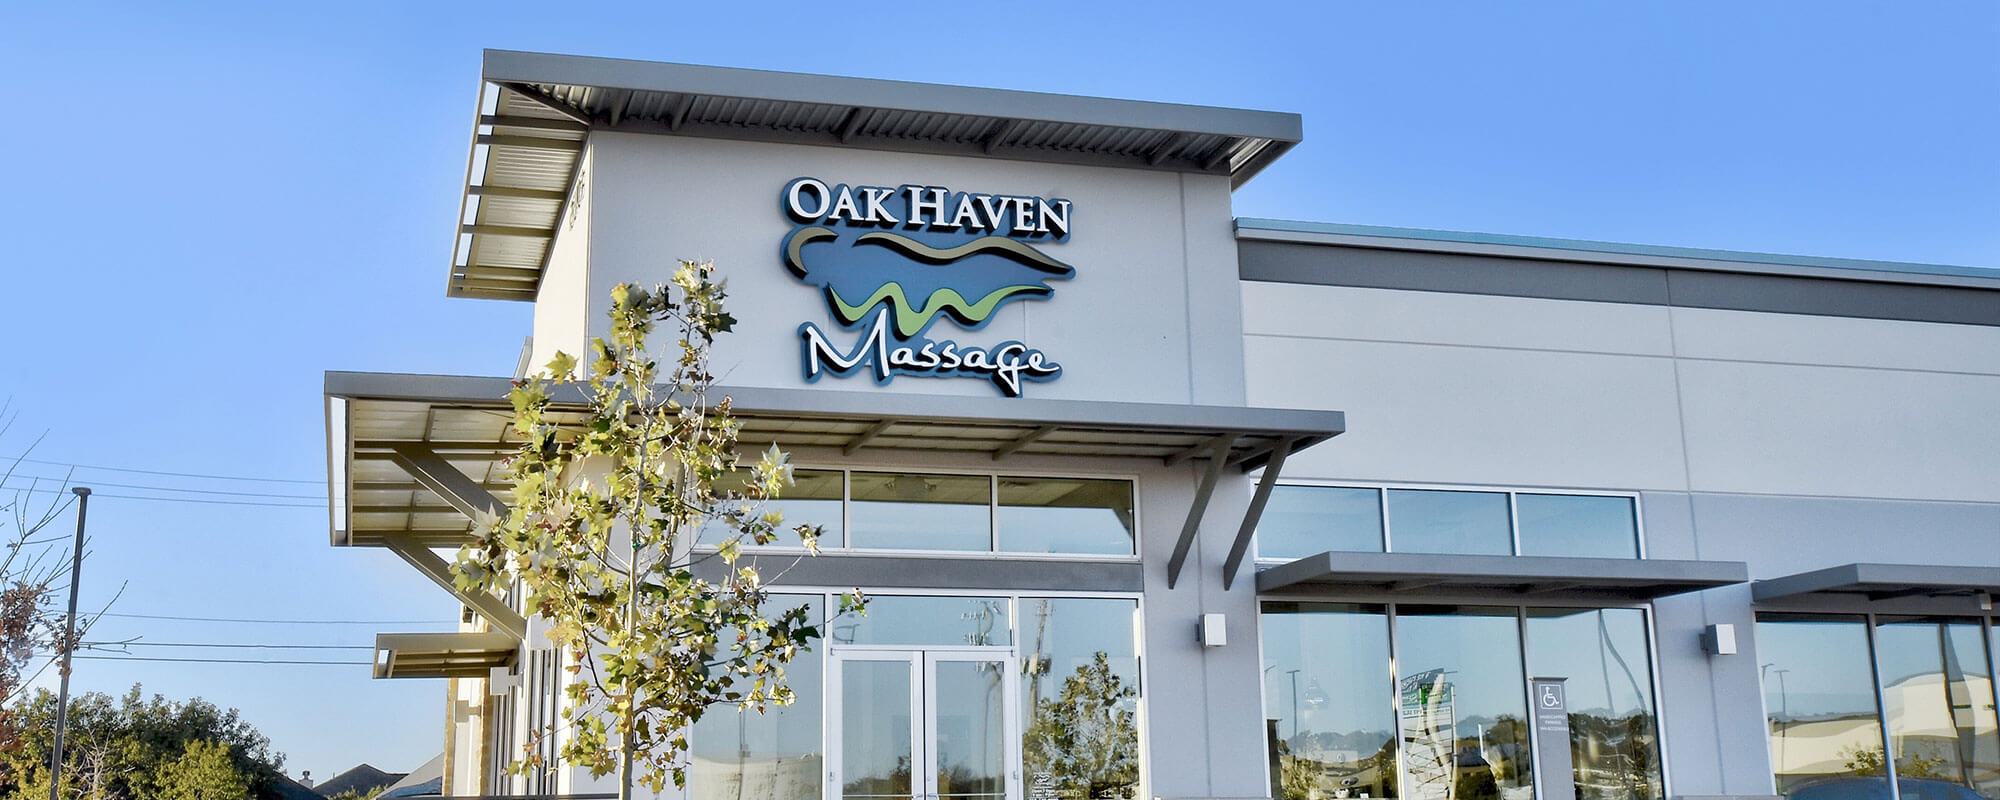 Locations Oak Haven Massage Austin San Antonio